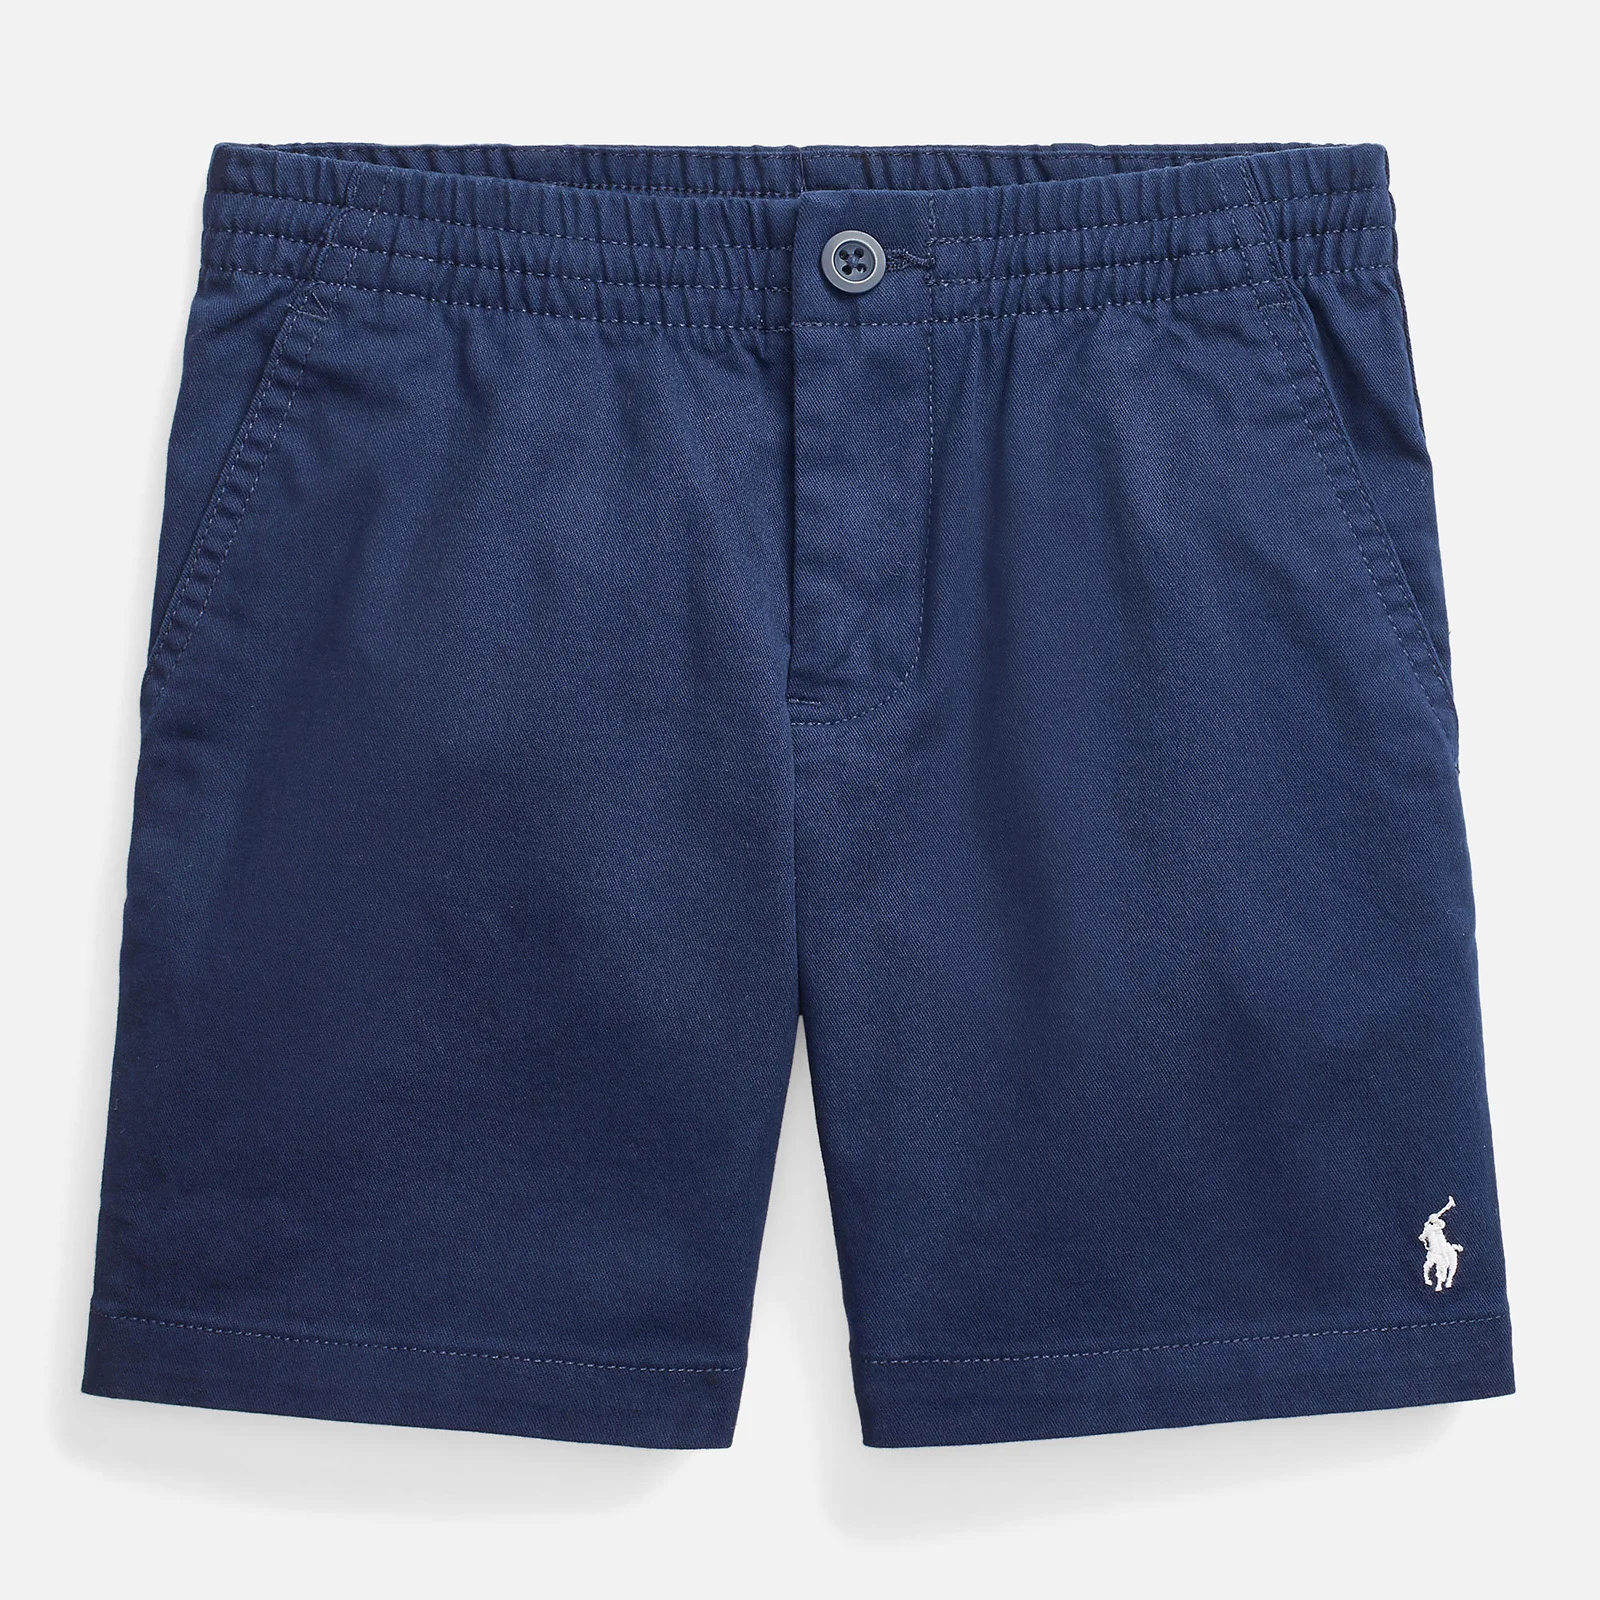 Polo Ralph Lauren Boys' Prepster Shorts - Newport Navy Image 1